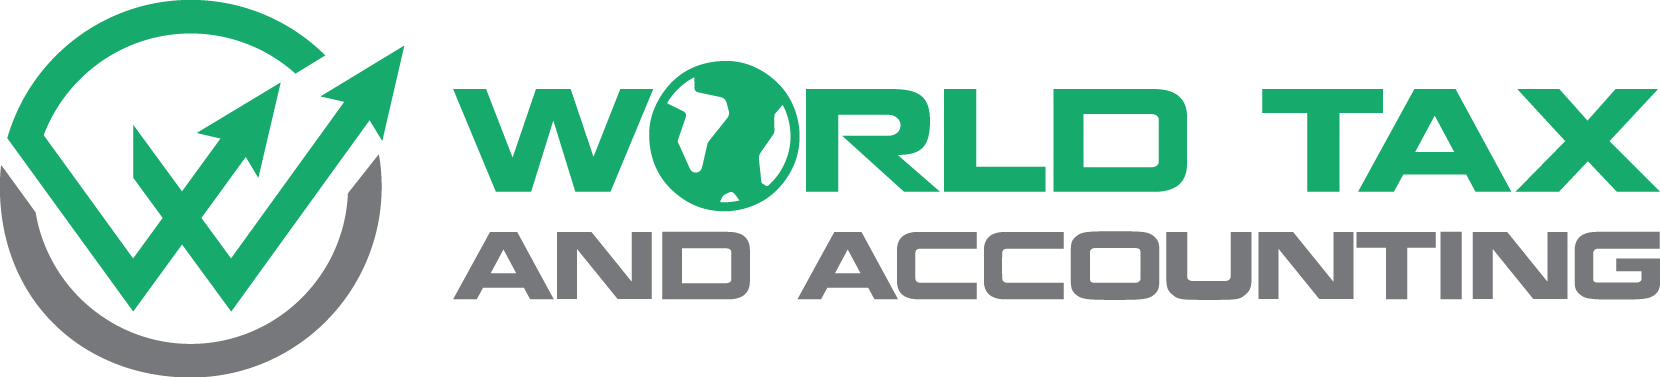 World Tax and Accounting logo